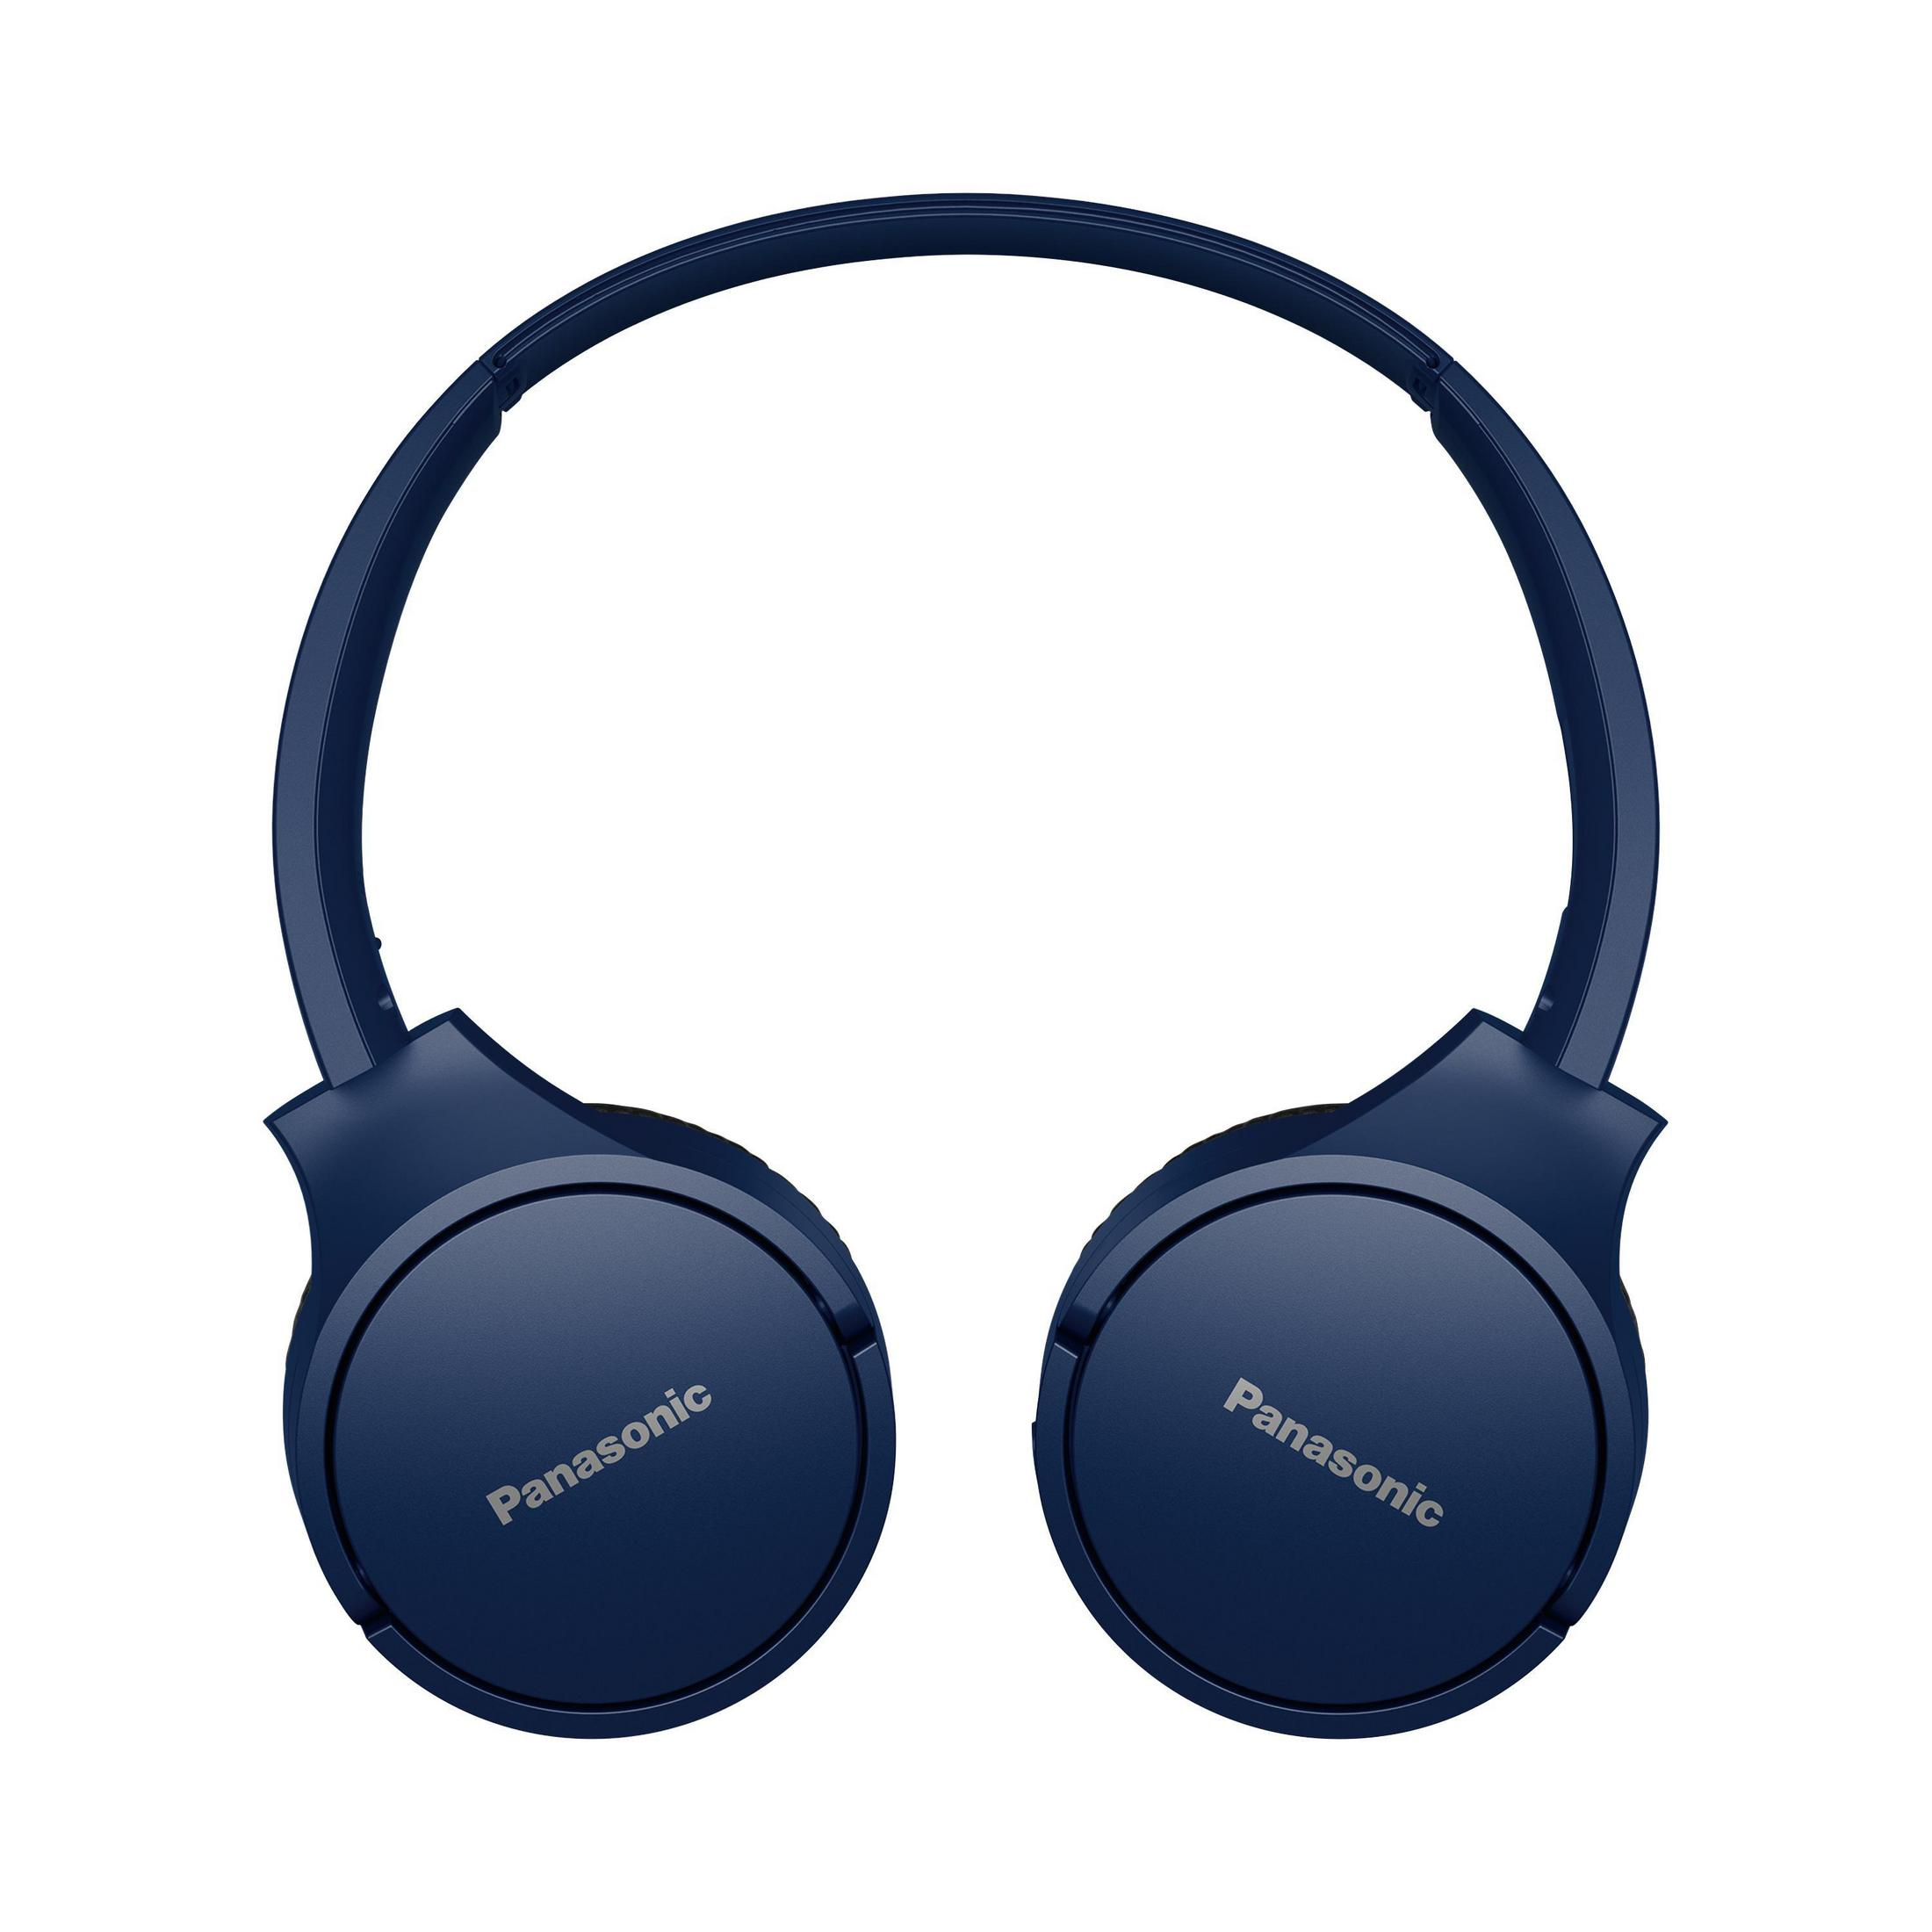 PANASONIC RB-HF420BE-A ON-EAR KOPFHÖRER BT Kopfhörer BLAU, Blau On-ear Bluetooth